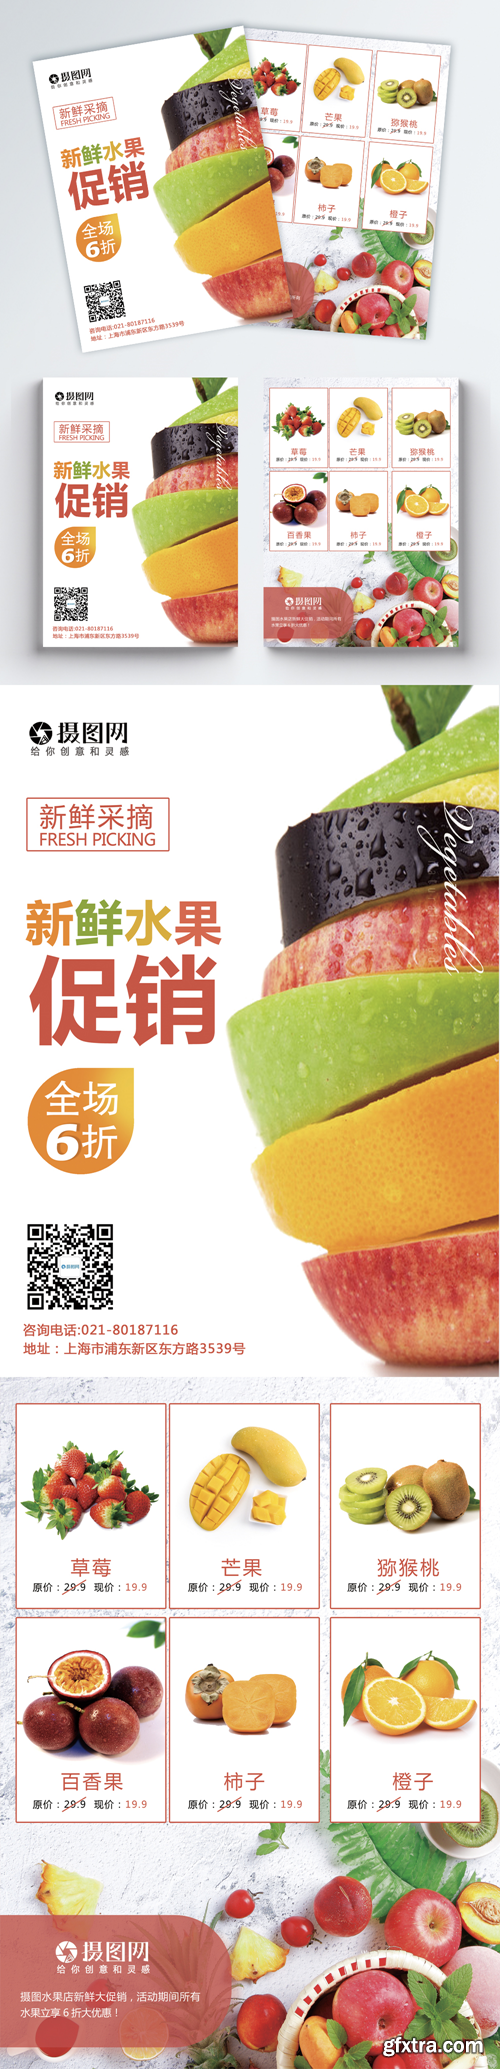 fruit sales promotion flyer